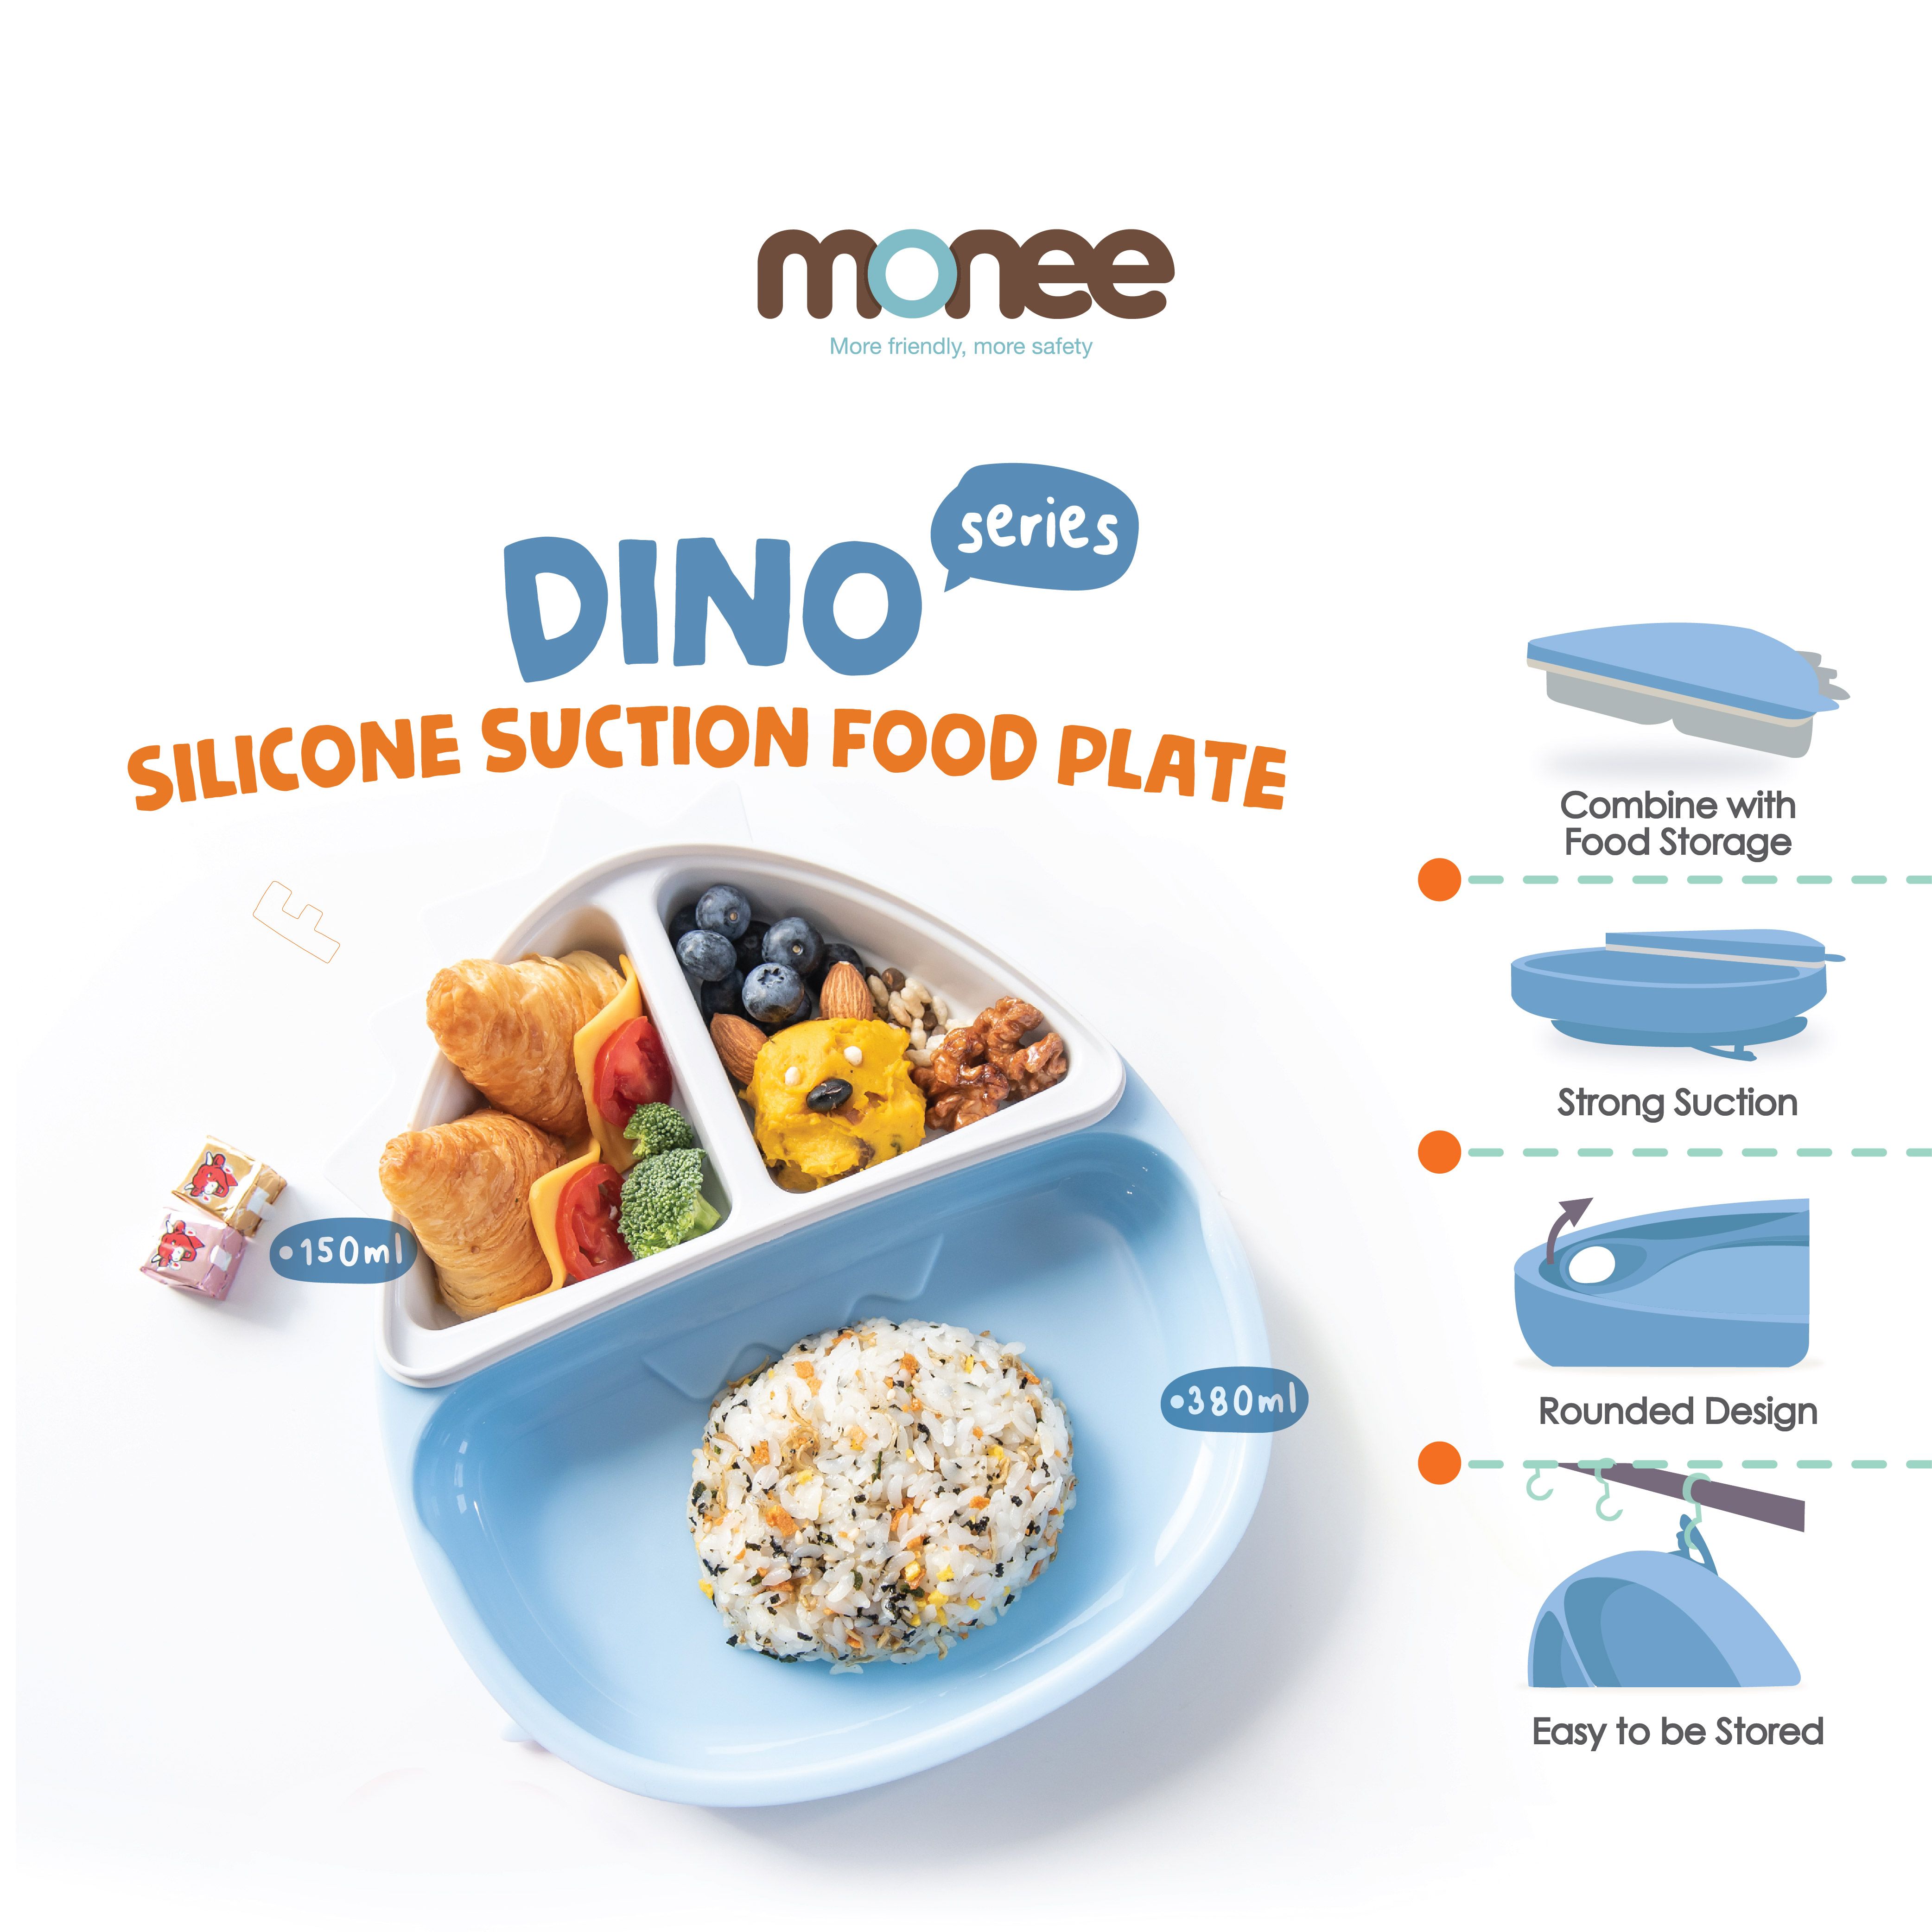 Monee Dinosaur Silicone Suction Food Plate Choco - 1